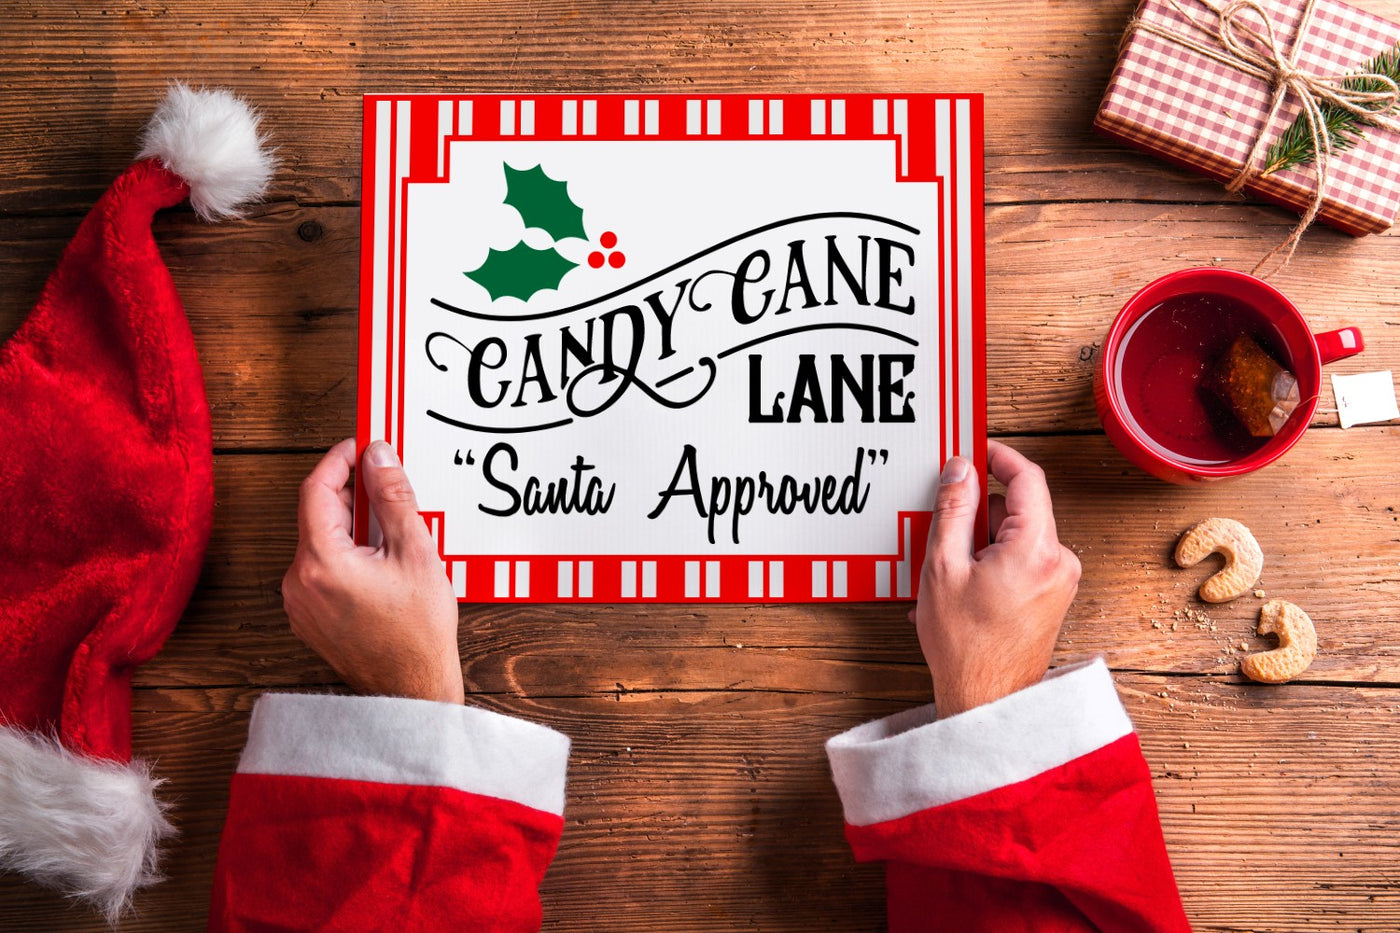 Candy Cane Lane sign